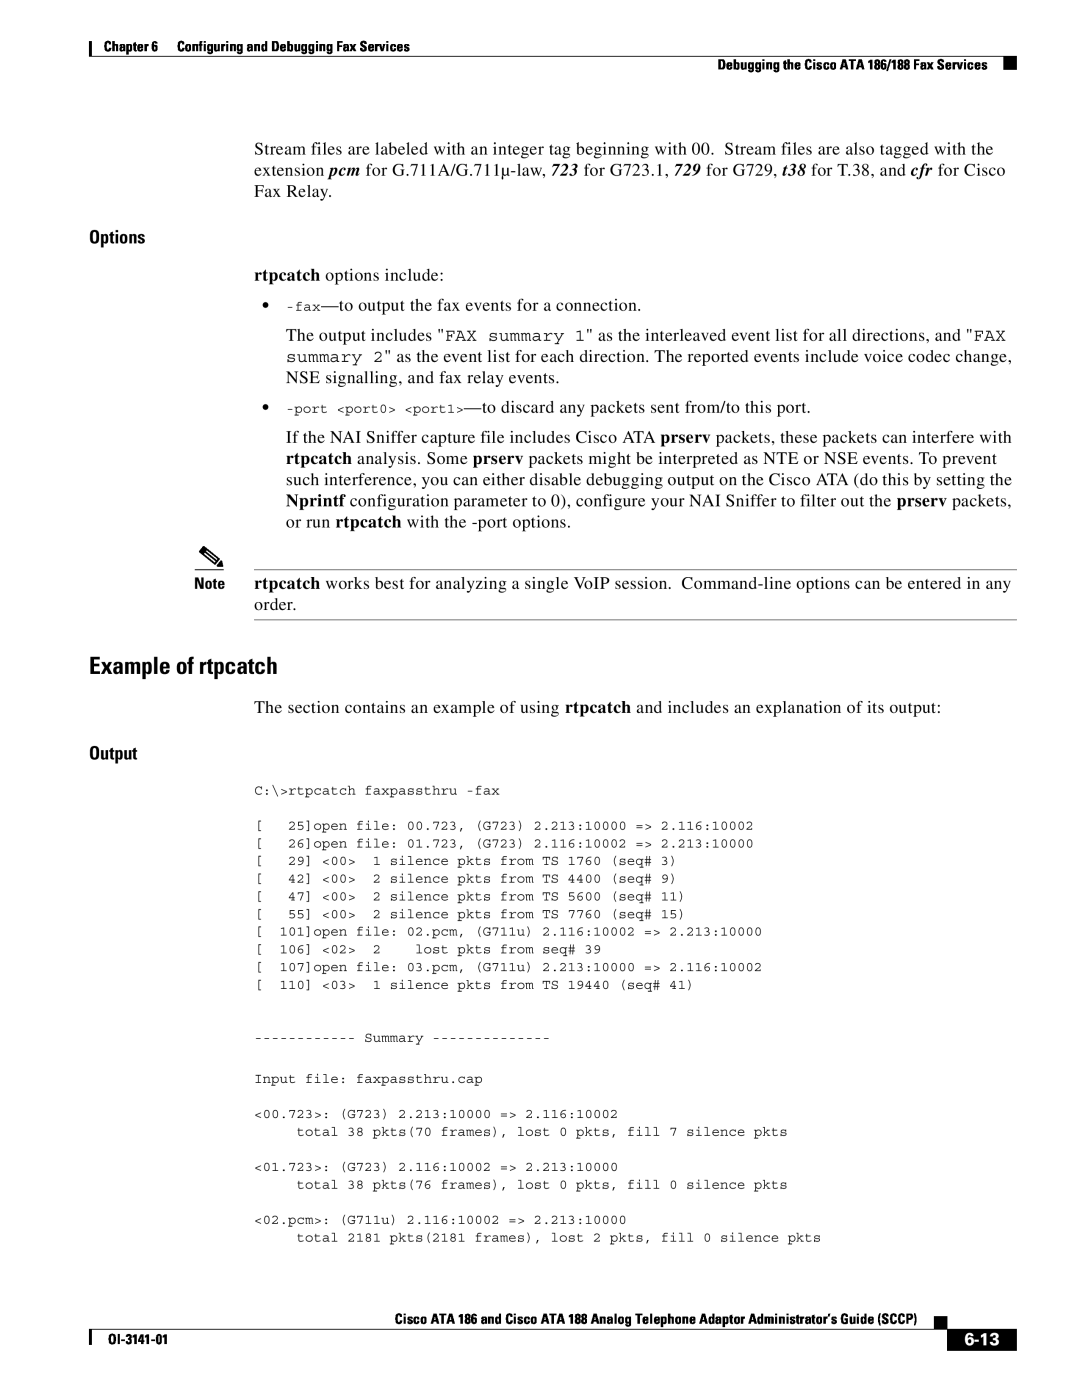 Cisco Systems ATA 188, ATA 186 manual Example of rtpcatch, Options, Output, 6-13 